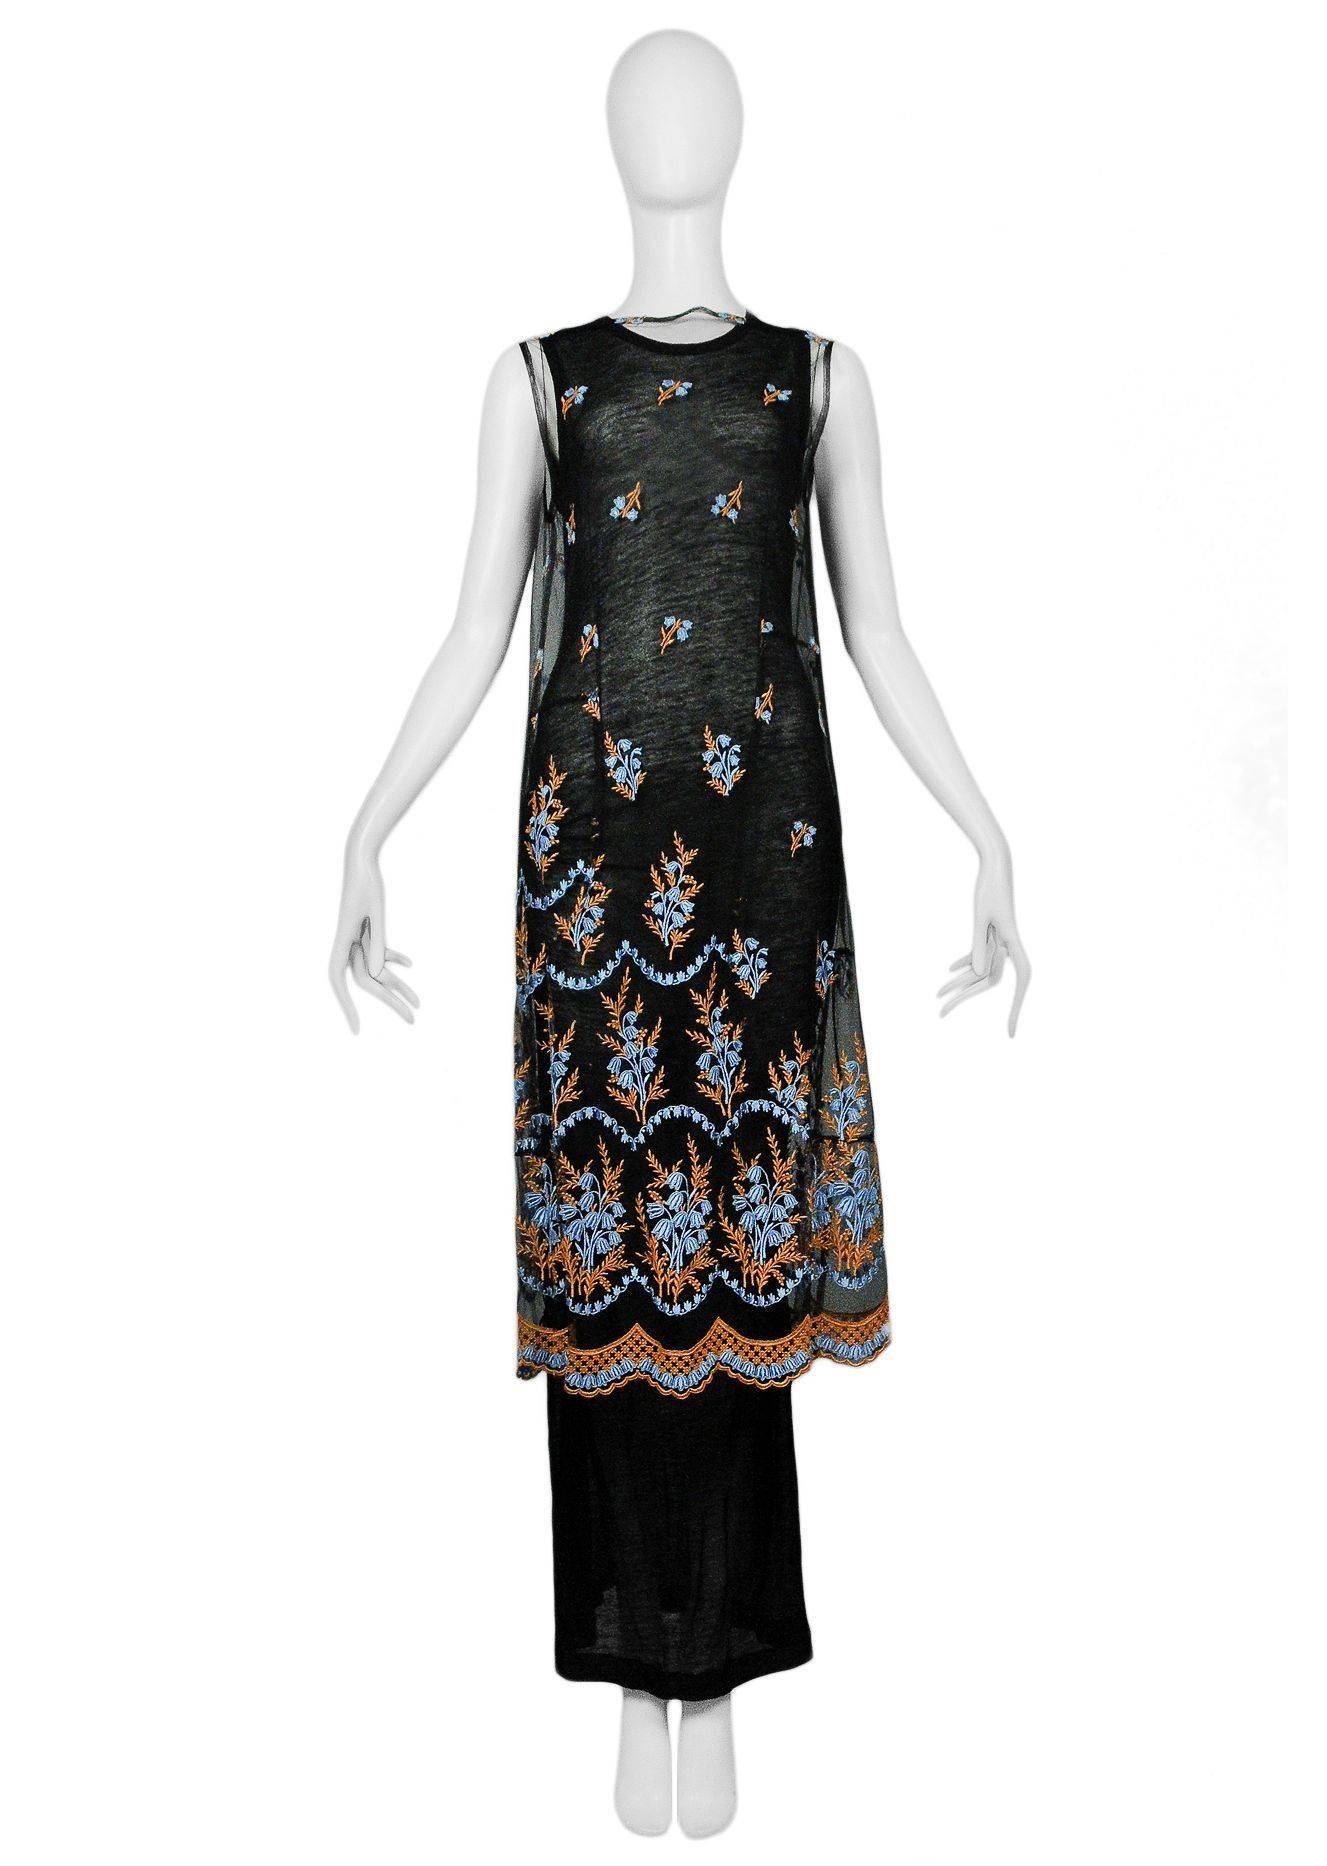 Vintage Comme des Garcons black mesh floral embroidered dress with black under gown. Collection 1995.
